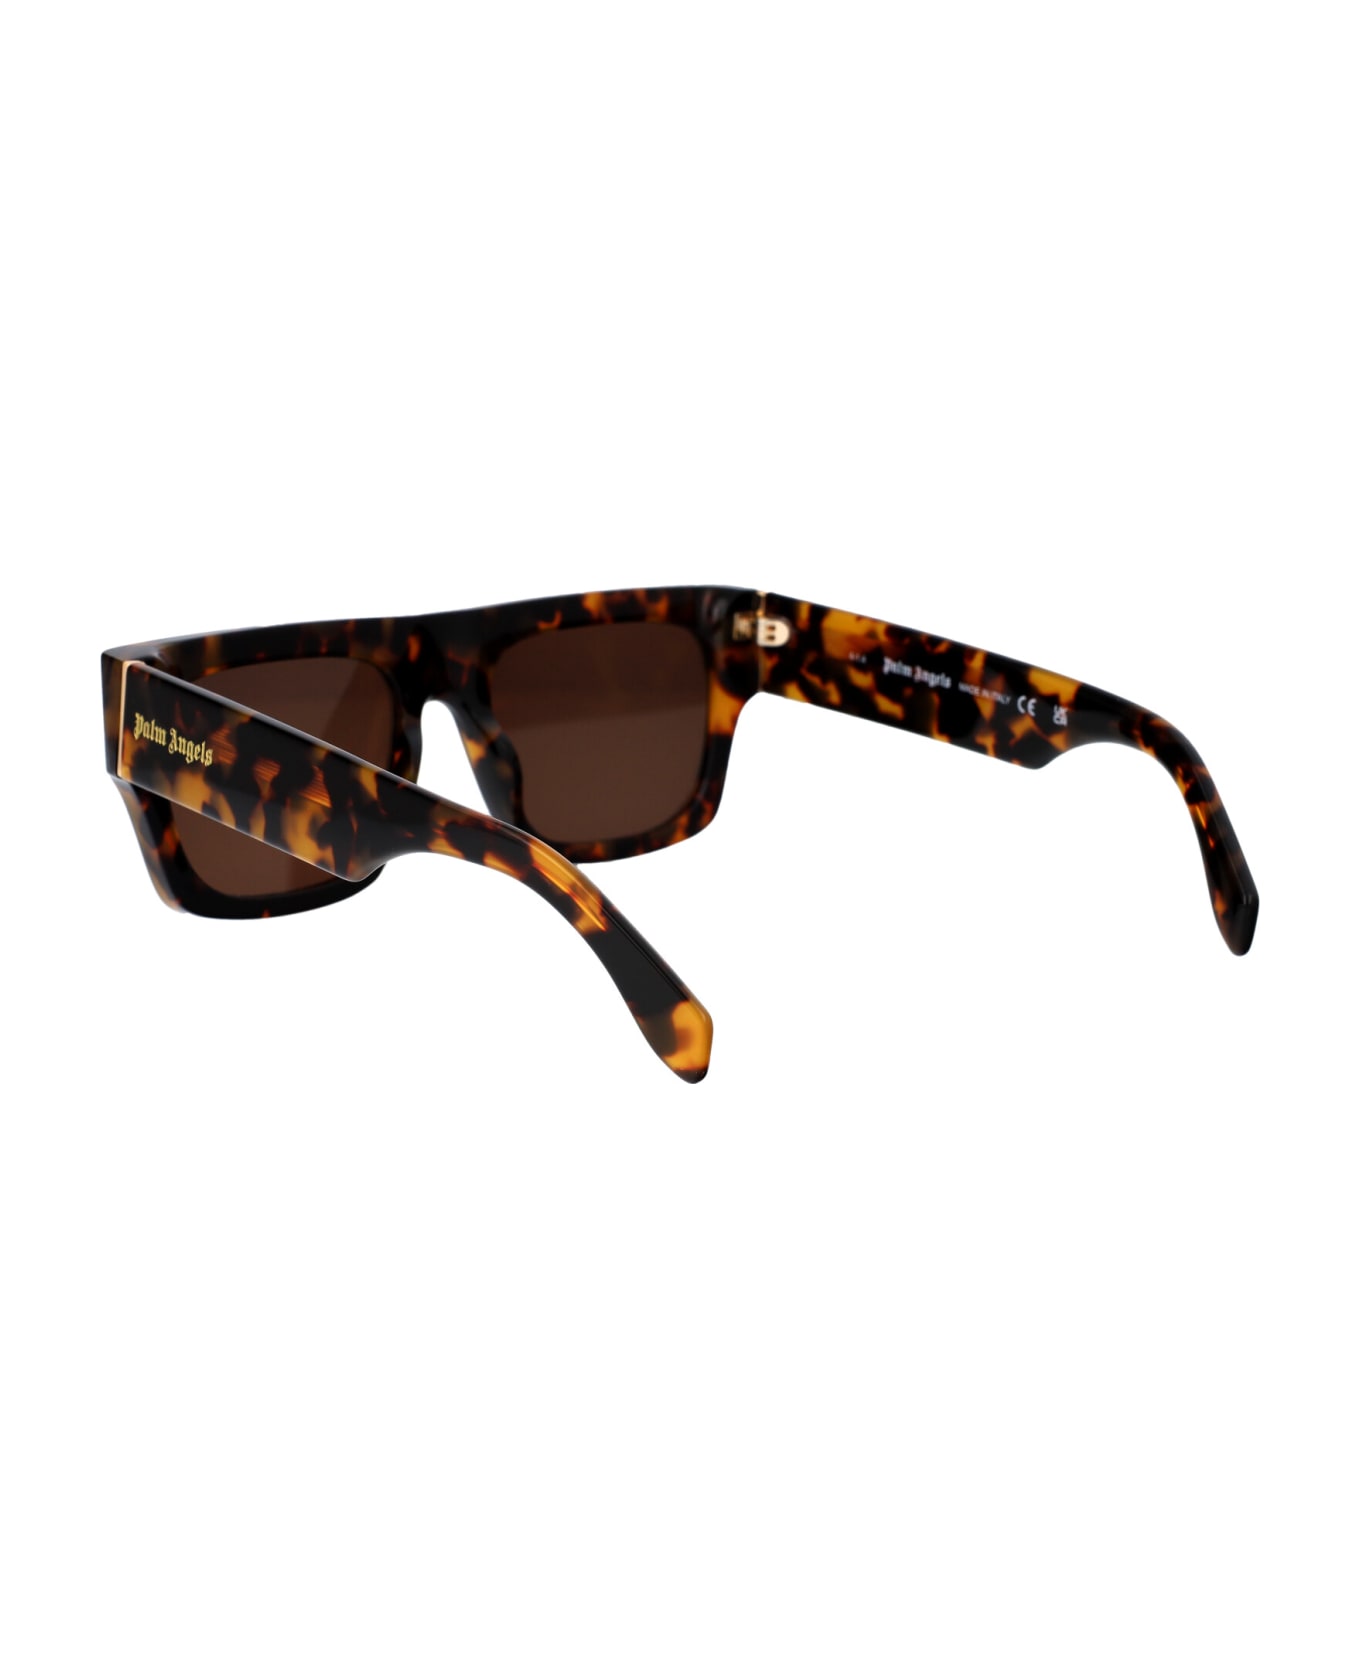 Palm Angels Pixley Sunglasses - 6064 HAVANA